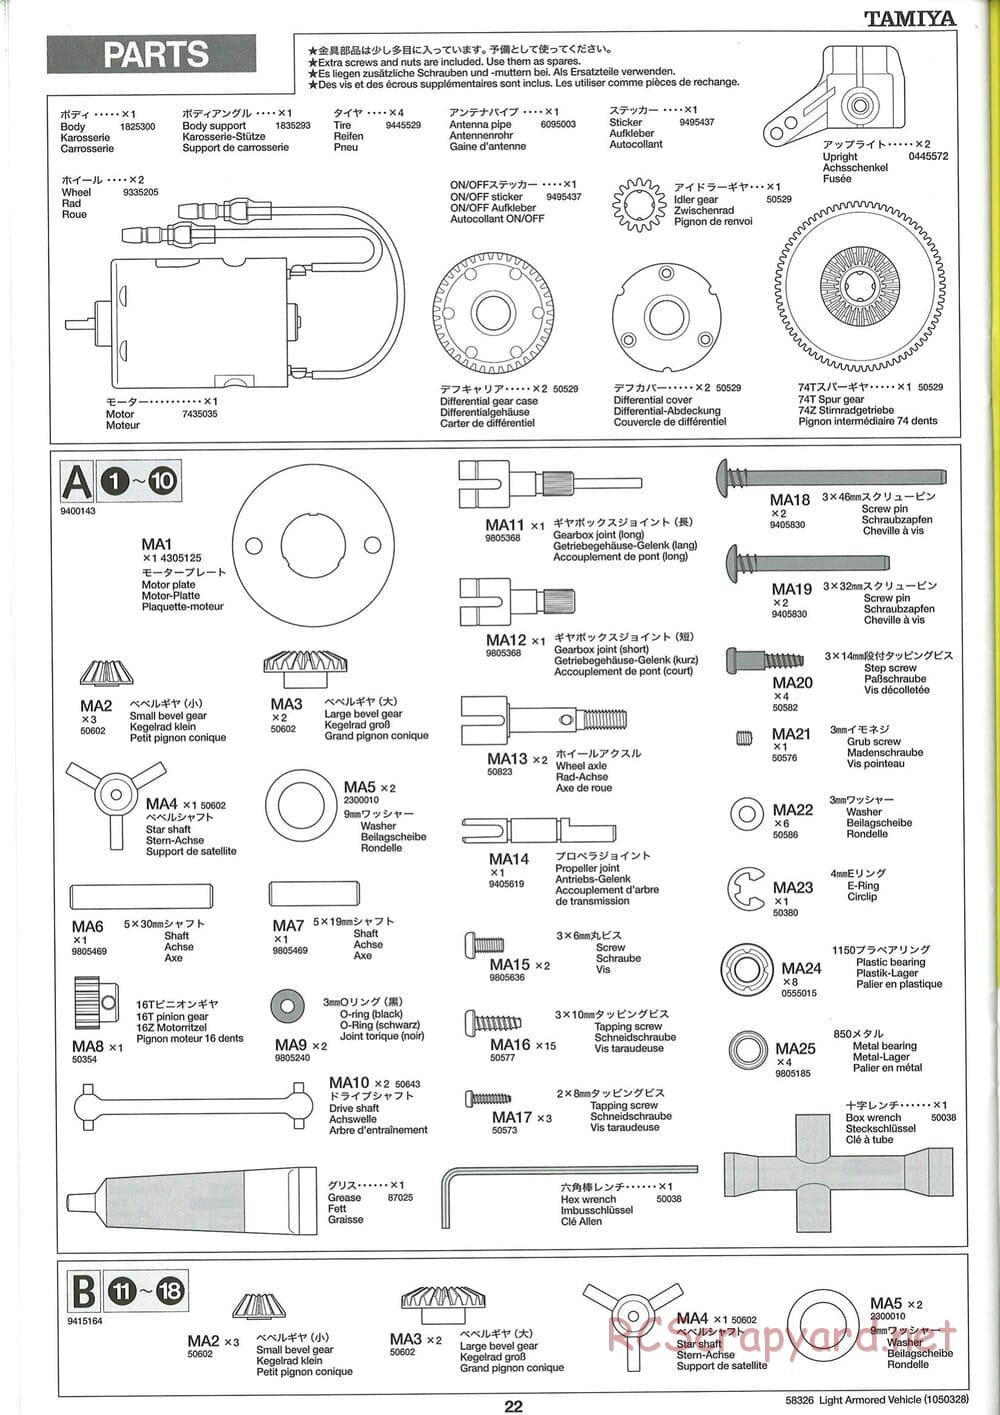 Tamiya - JGSDF Light Armored Vehicle - TA-01 Chassis - Manual - Page 22